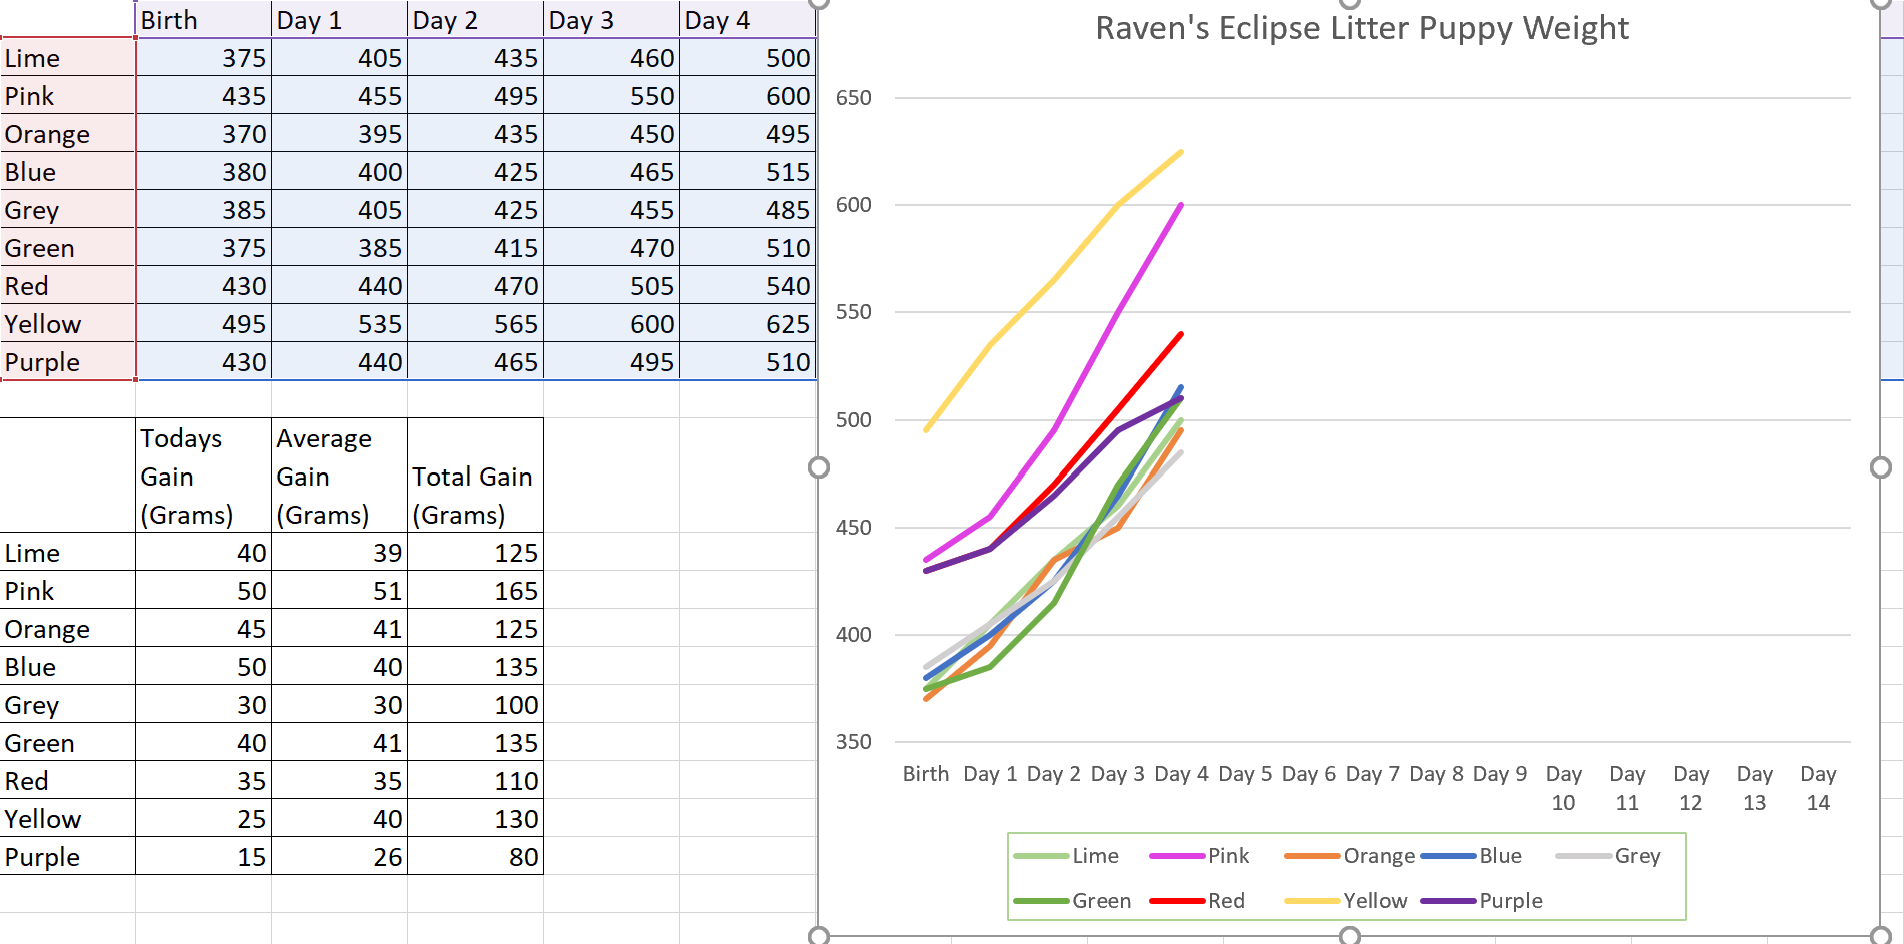 Raven stats day 4